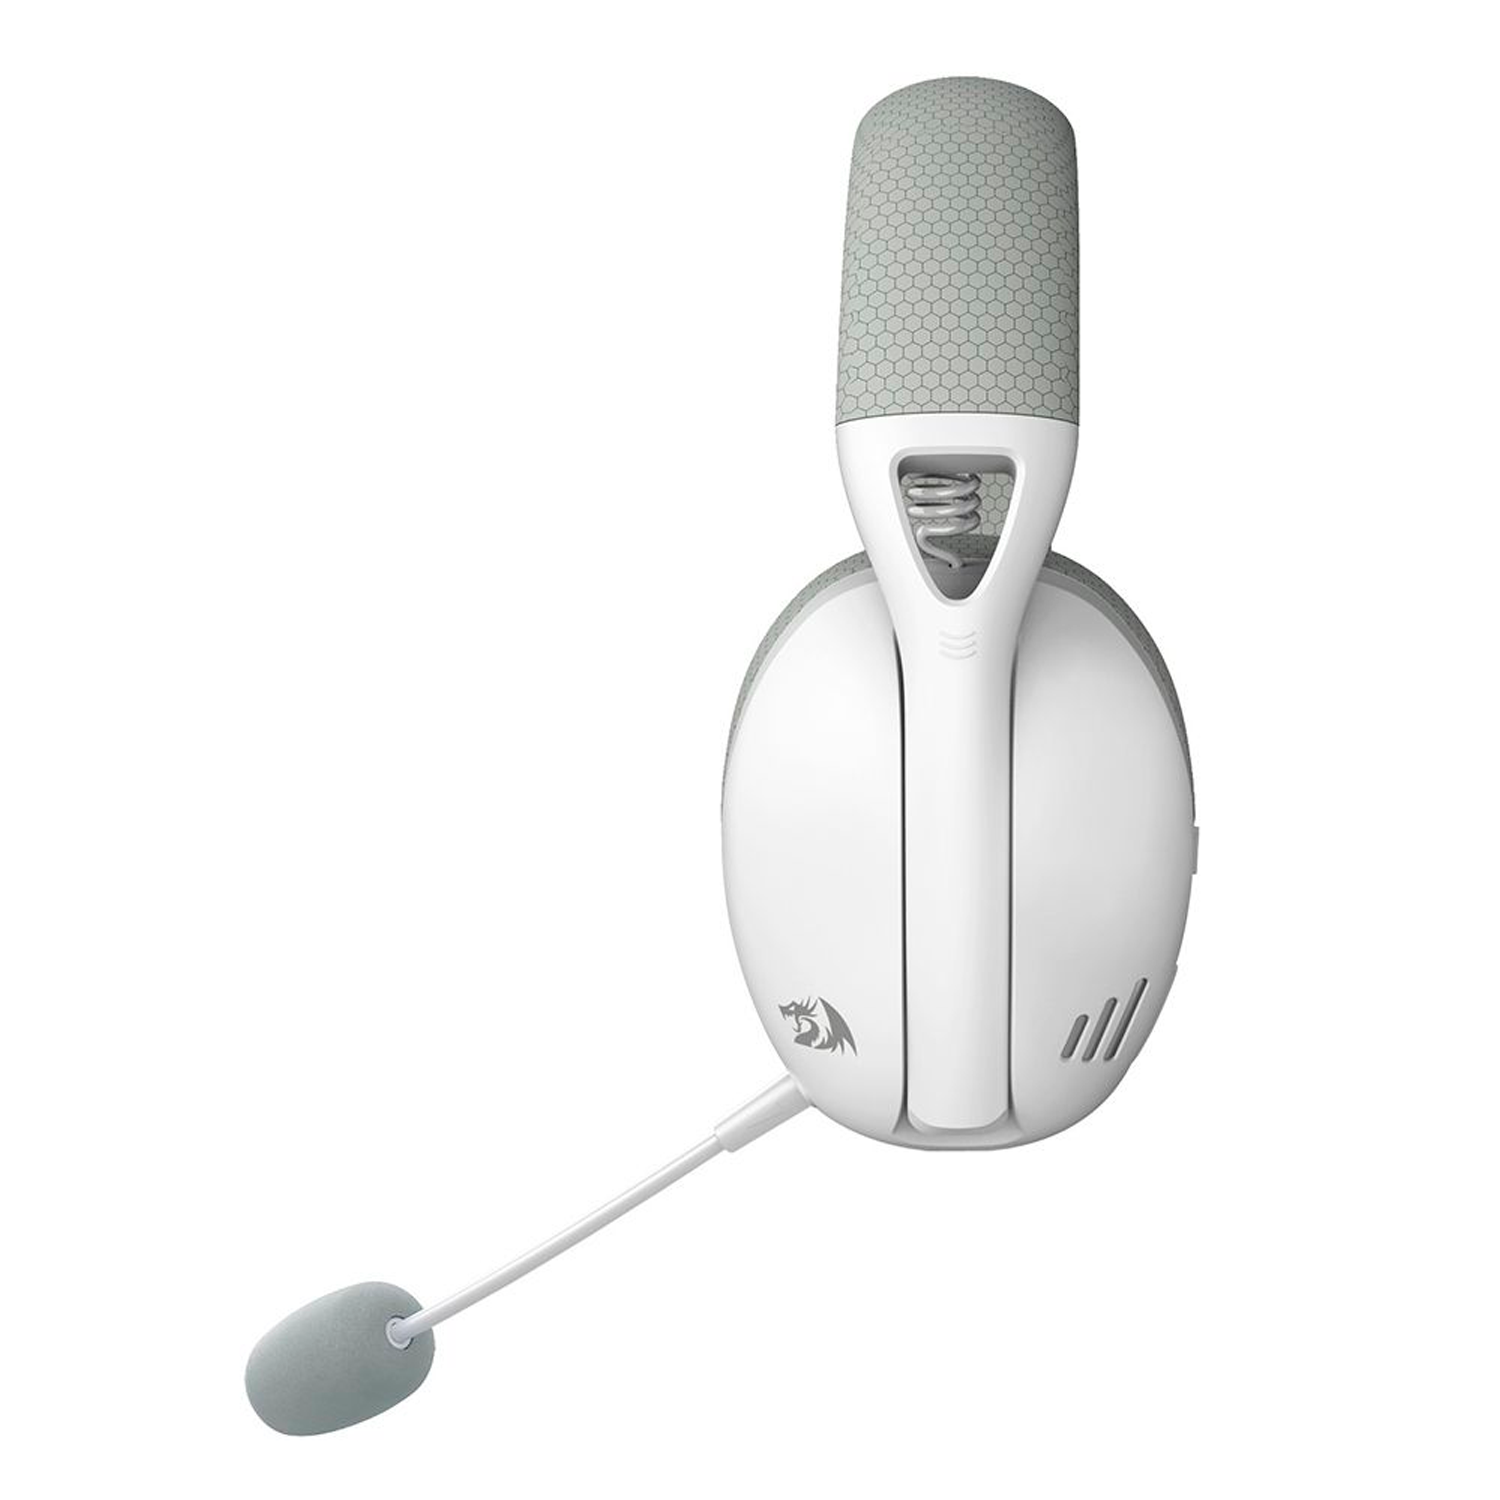 Headset Gamer Redragon Ire Pro H848 Bluetooth/Wireless - Branco e Cinza
